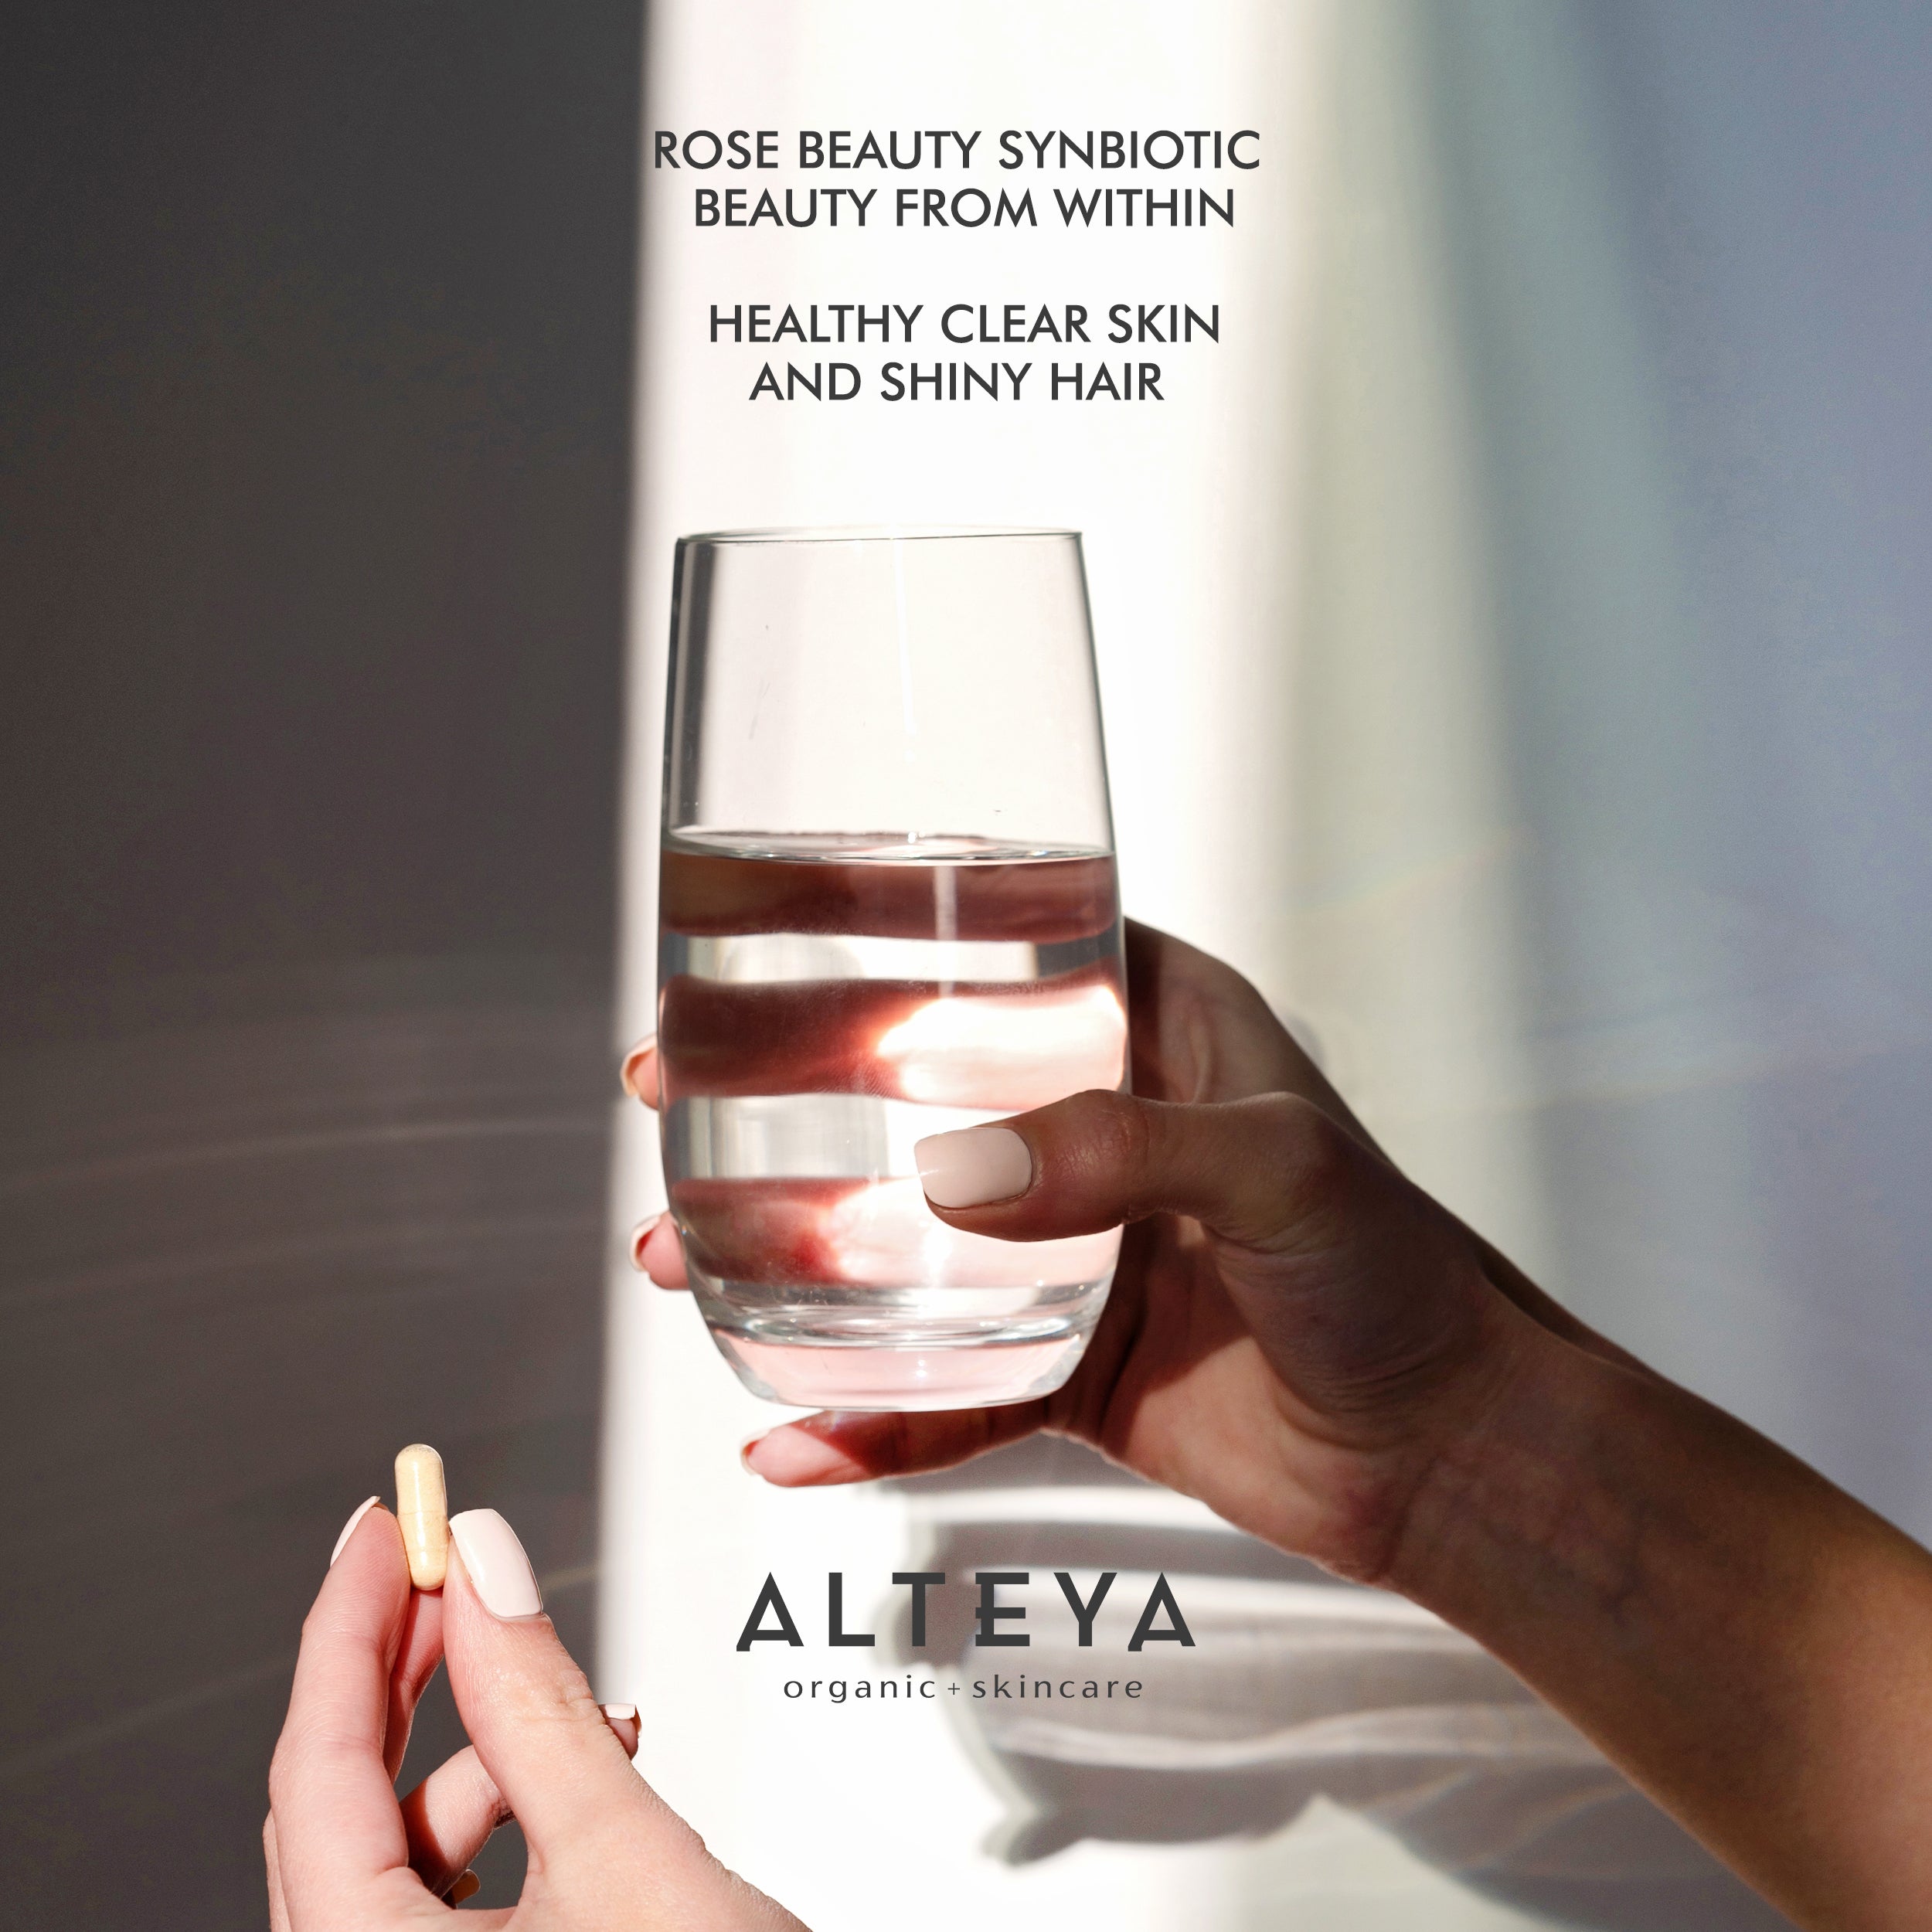 A woman holding a glass of Alteya Organics' Rose Beauty Prebiotic and Probiotic - Synbiotic Skin & Metabolism Vegan Organic Supplement water.